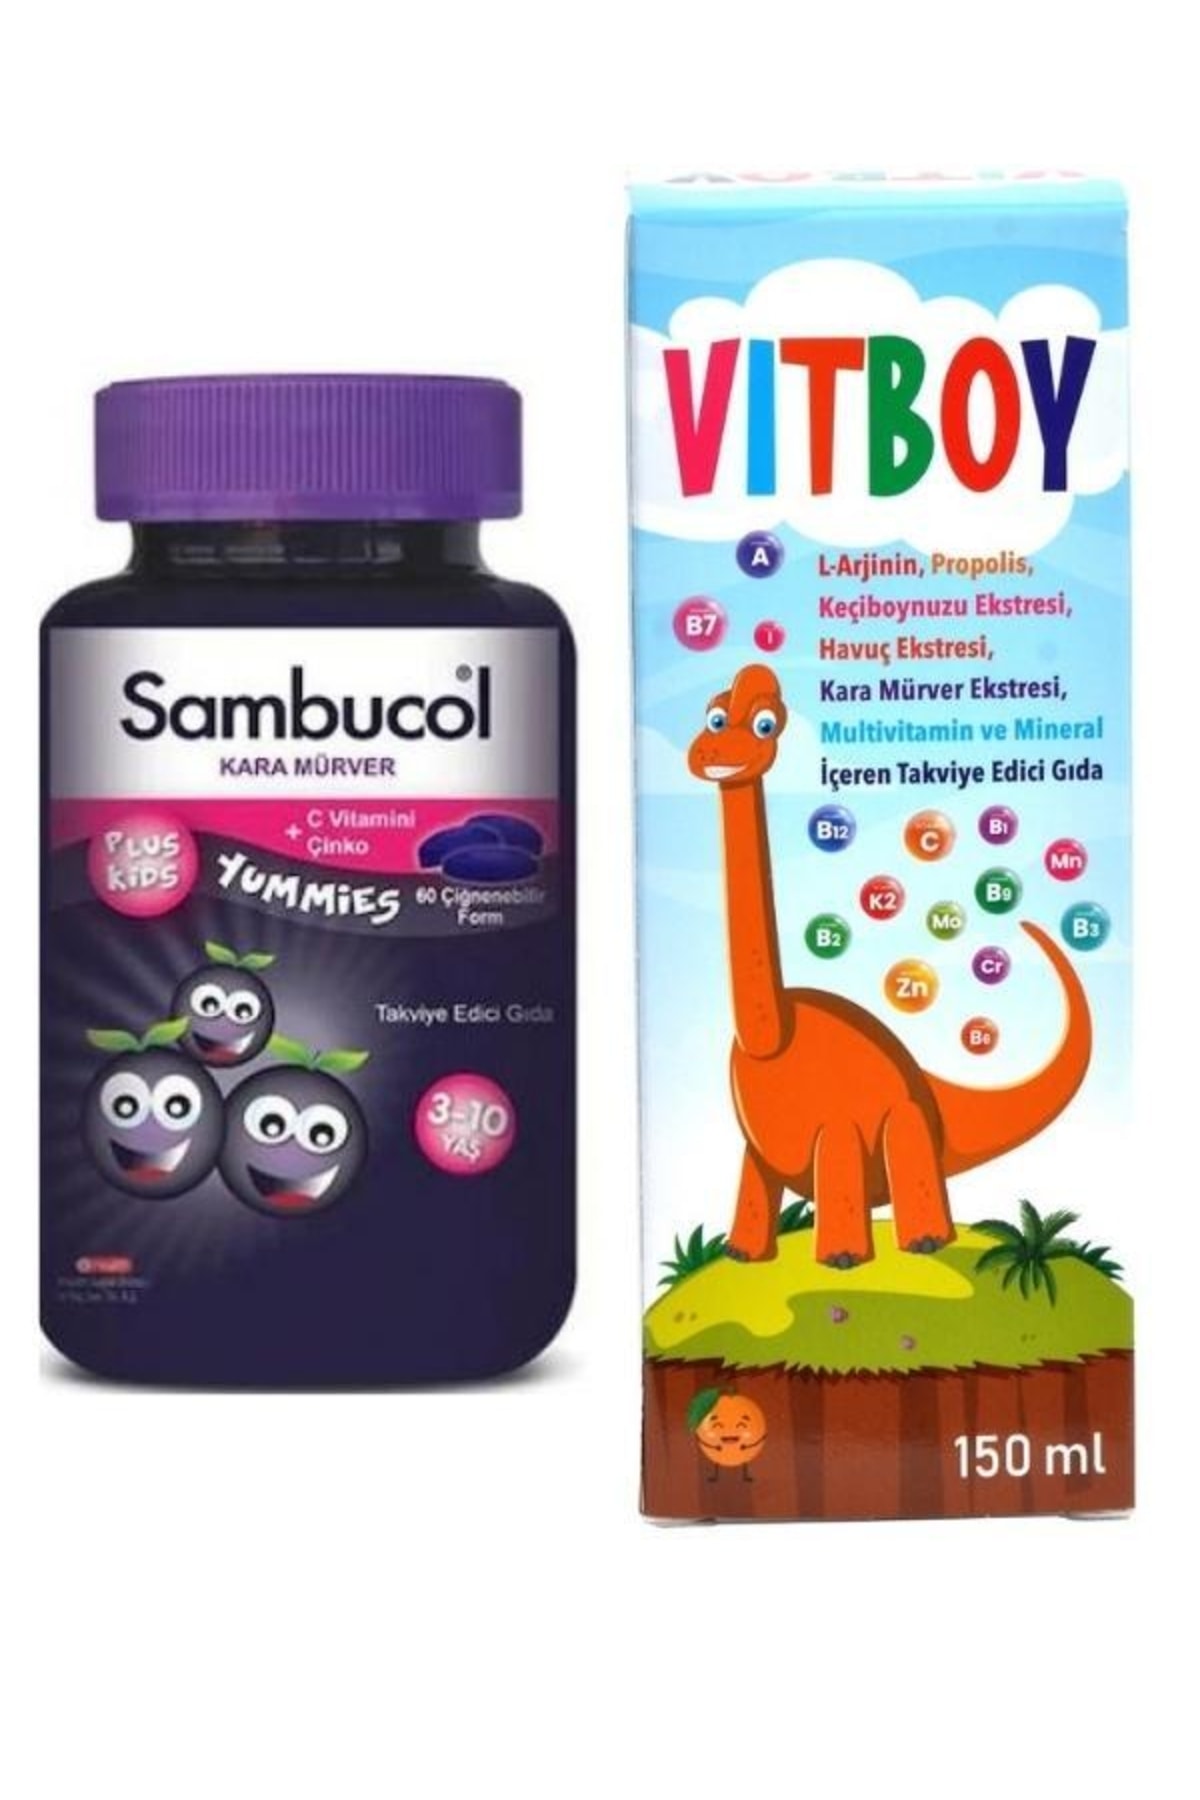 Sambucol Plus Kids Yummies 60 - Vitboy Multivitamin Ve Mineral Içeren Takviye Edici Gıda 150 Ml